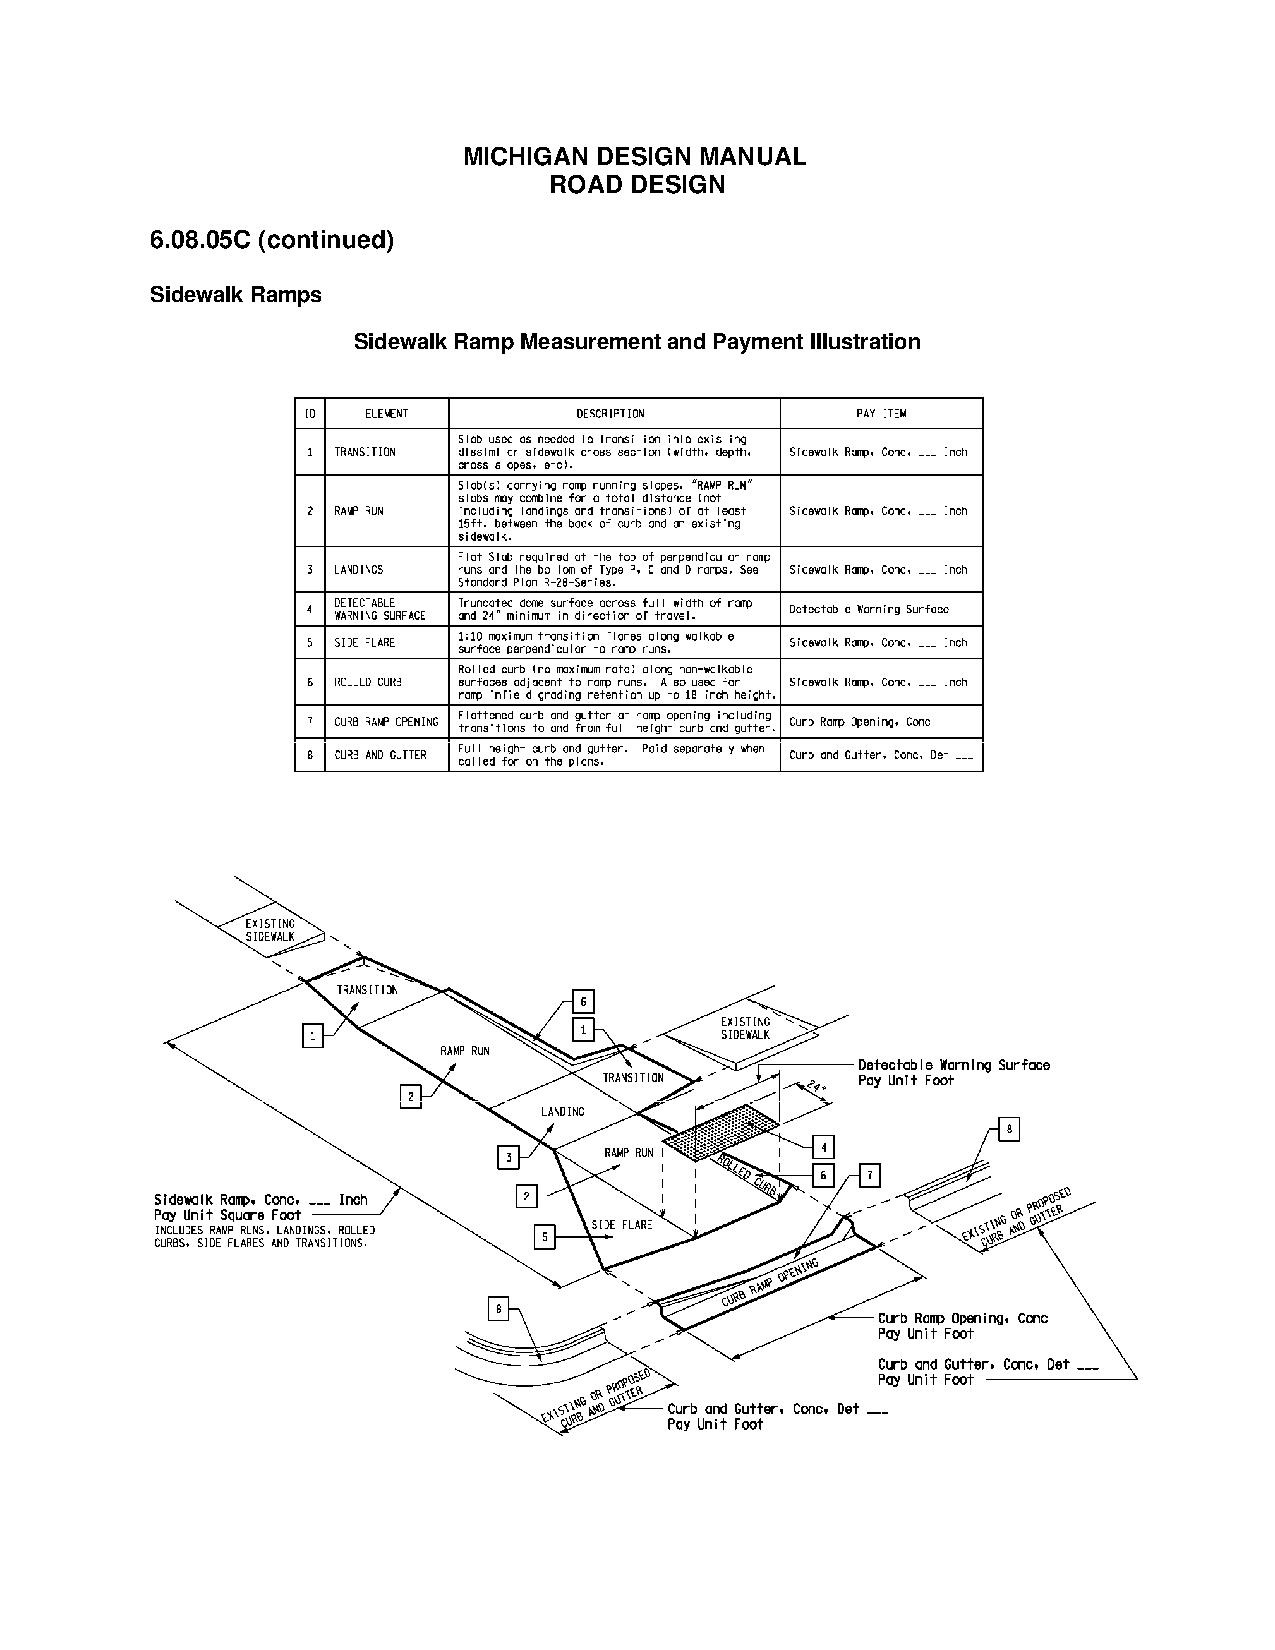 Road Design Manual Chapter 6 - ADA Ramp payment items.pdf